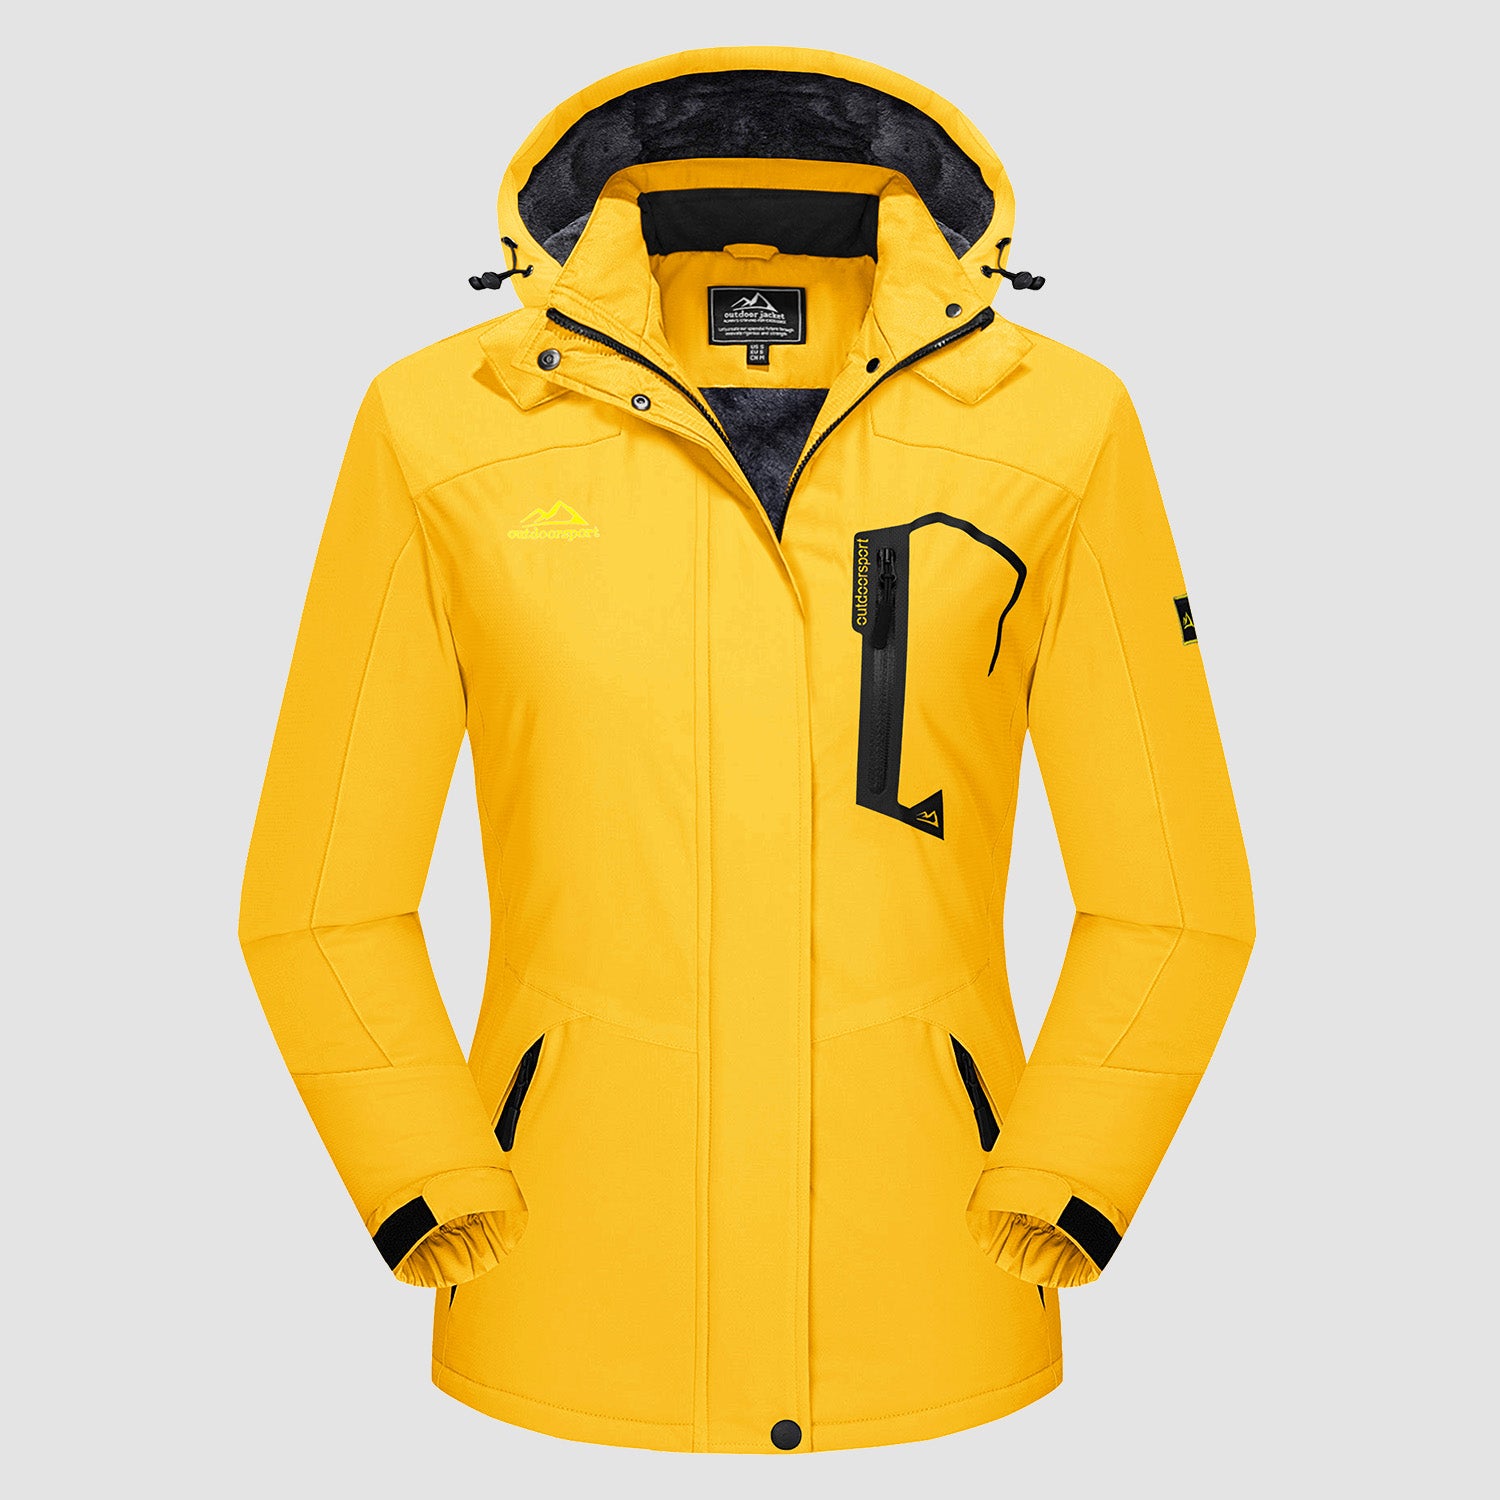 Women's Winter Coats Water Resistant Ski Snow Jacket Warm Fleece Parka Raincoats with 4 Pockets